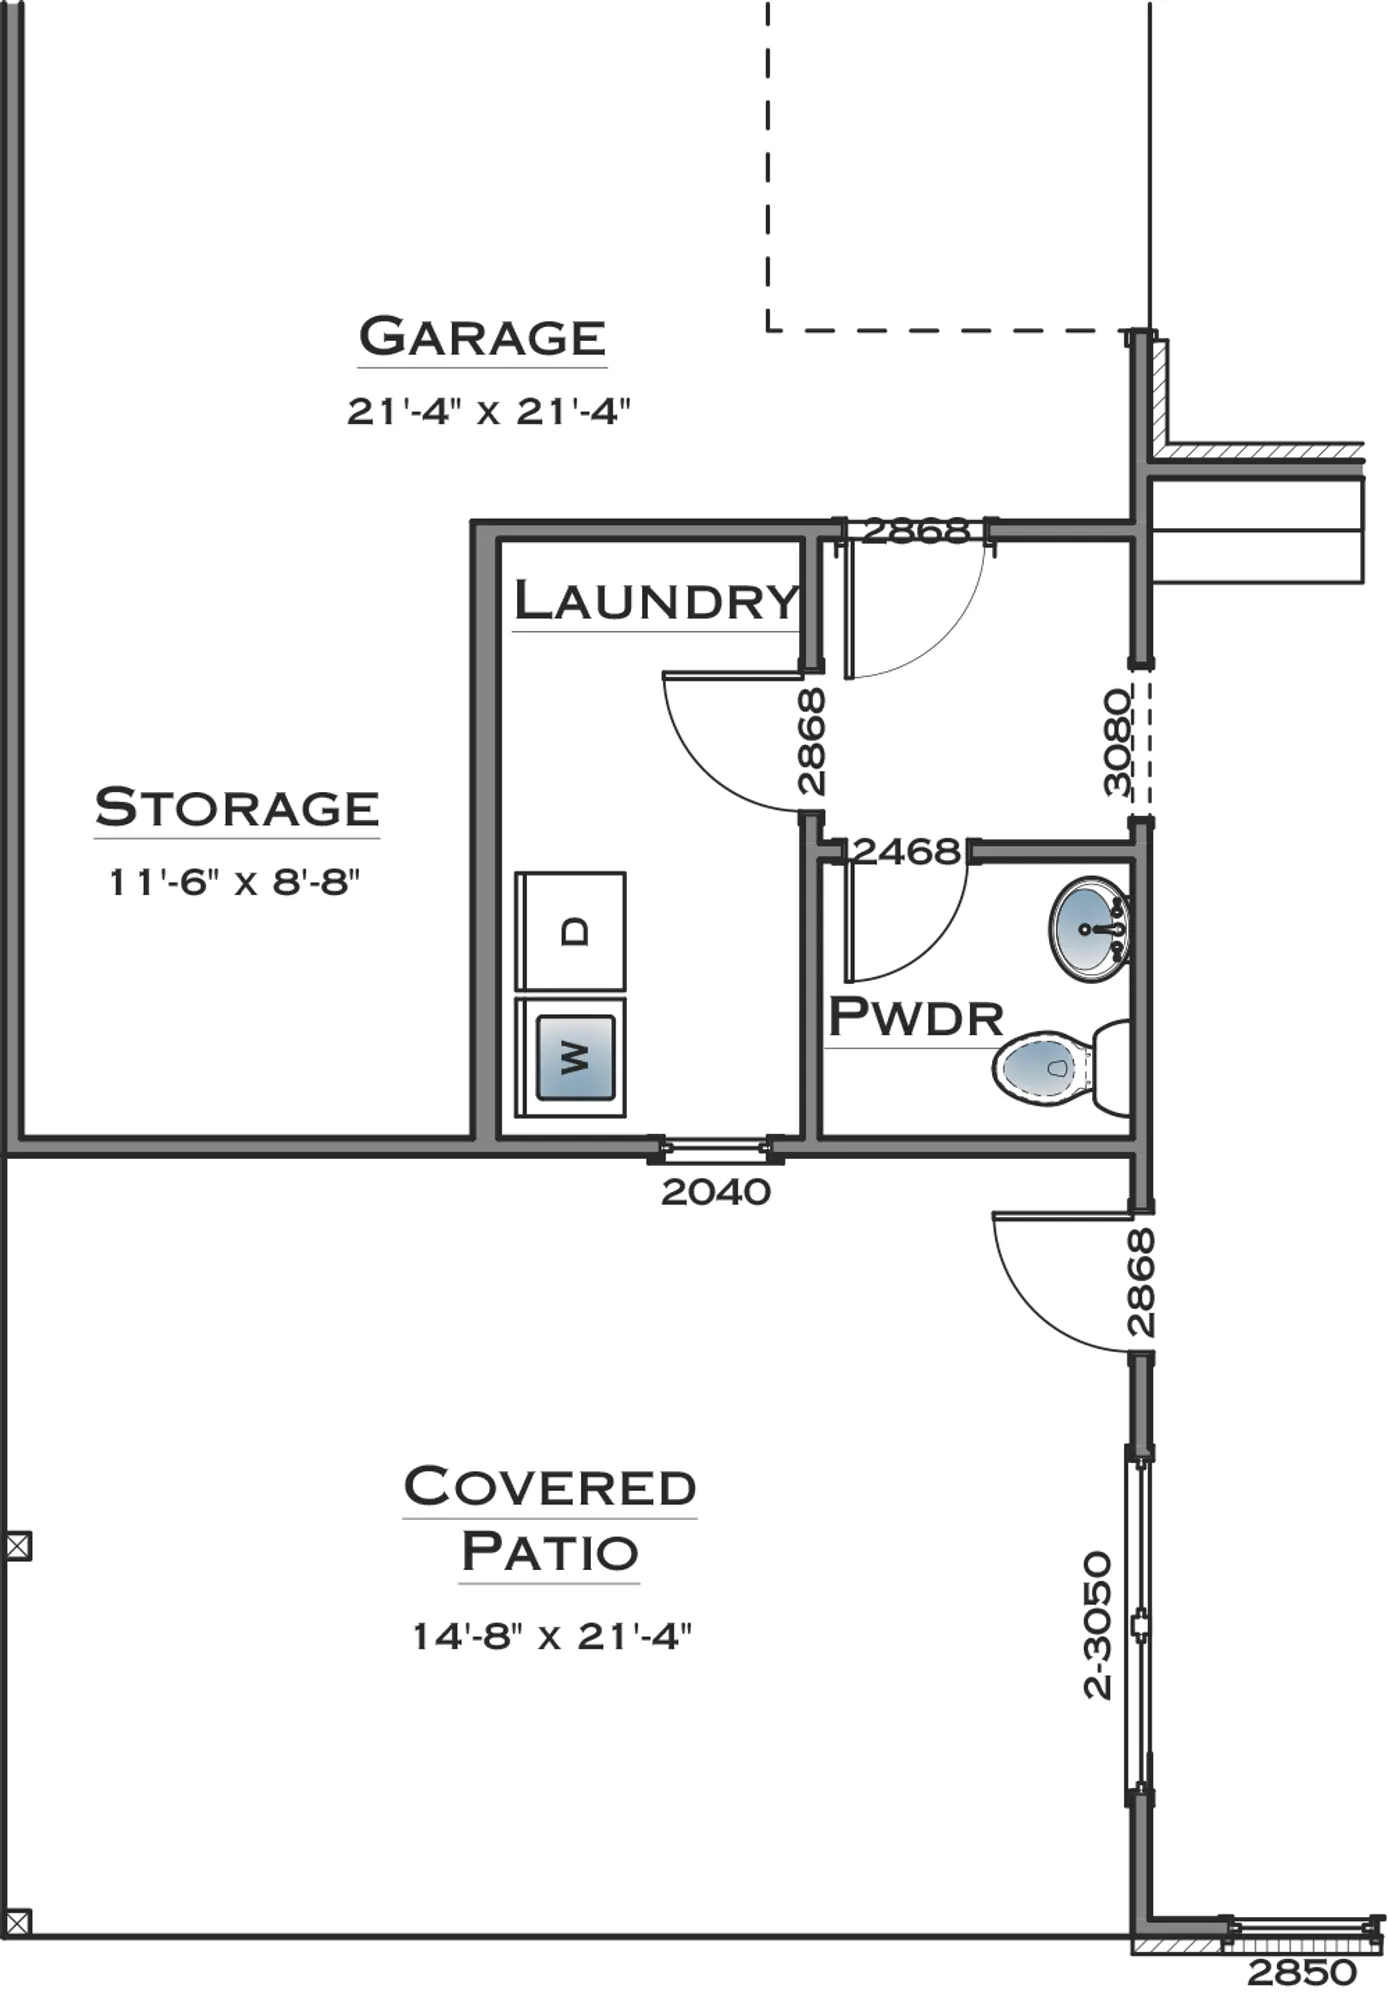 Covered Patio - Garage Storage Option - undefined